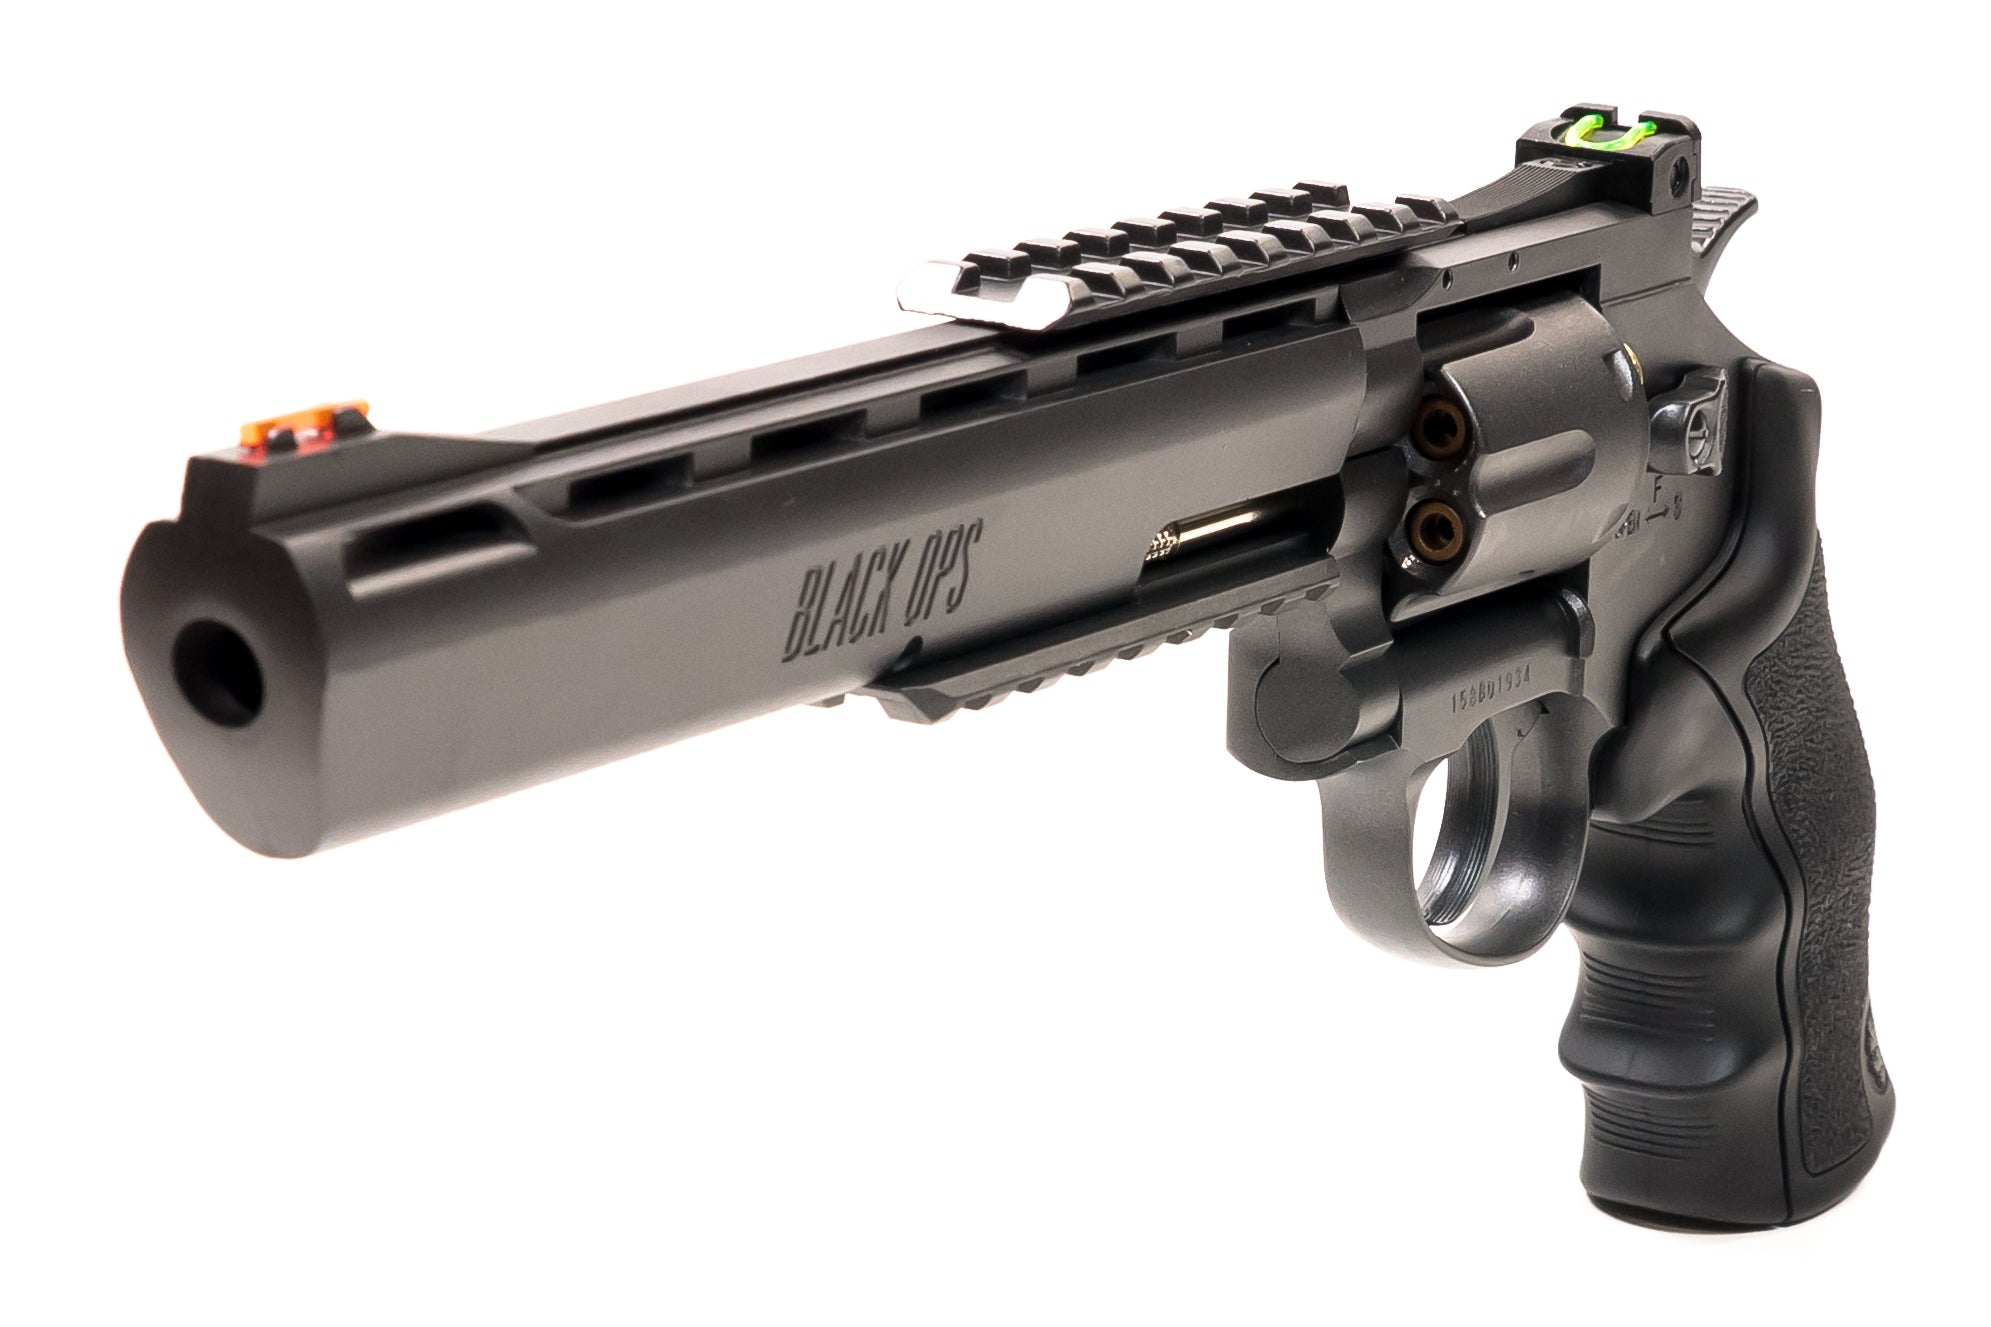 Exterminator Full Metal Revolver 6 Chrome - Black Ops USA